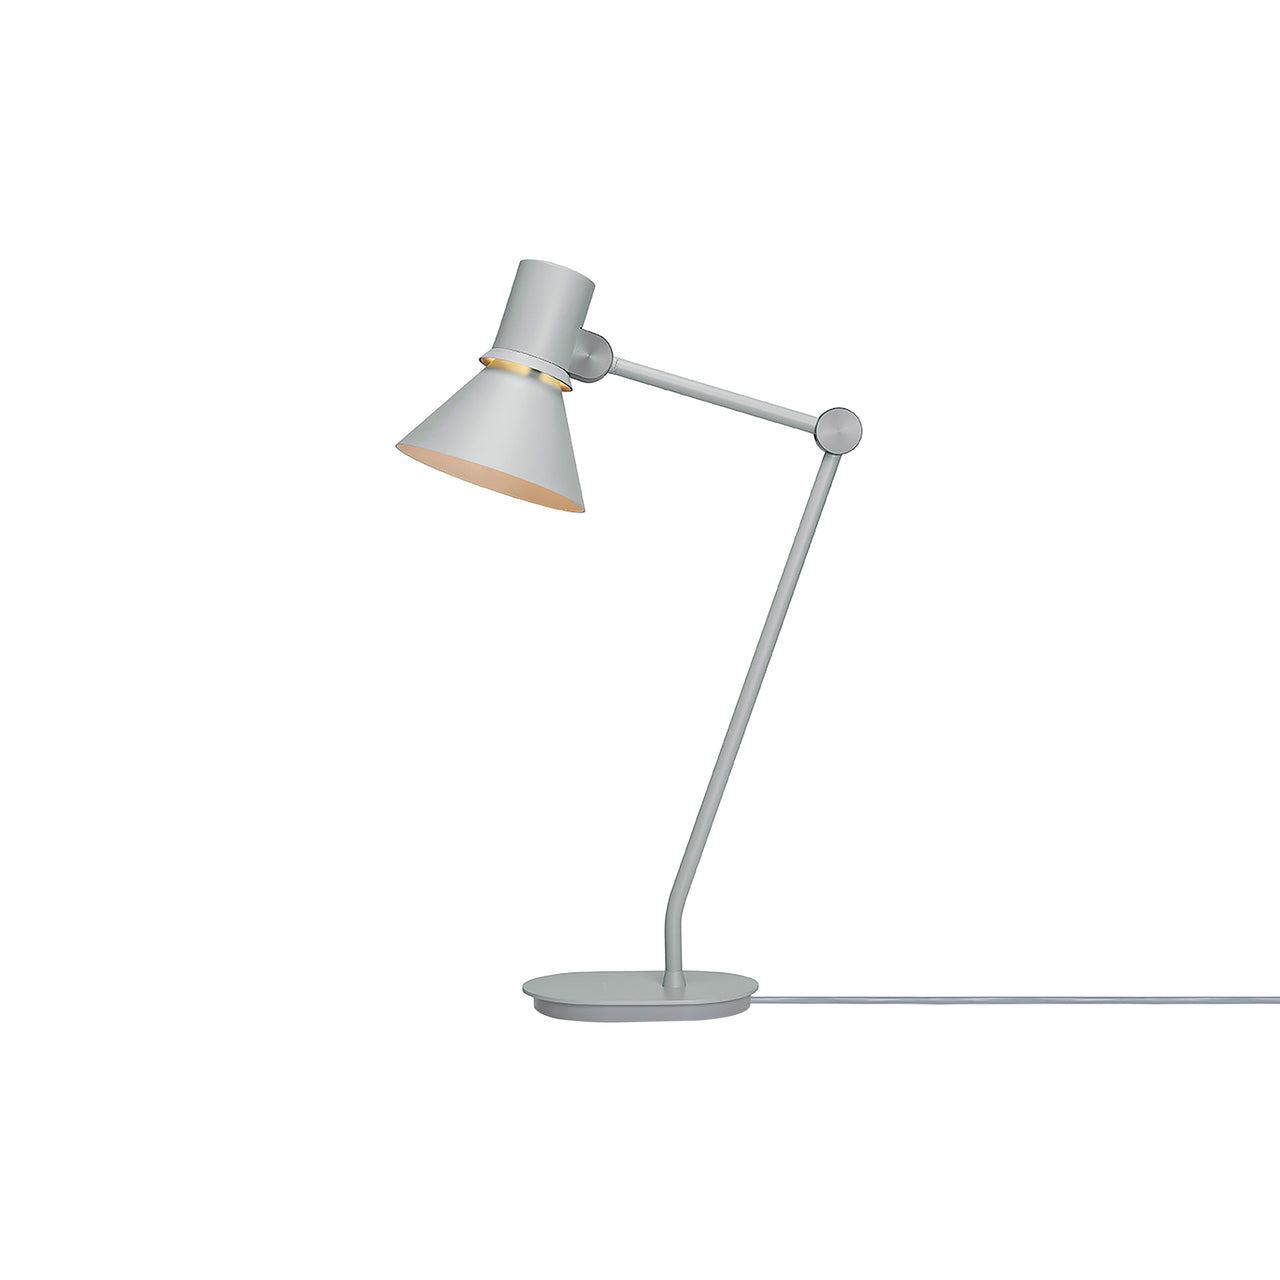 Type 80 Table Lamp: Grey Mist